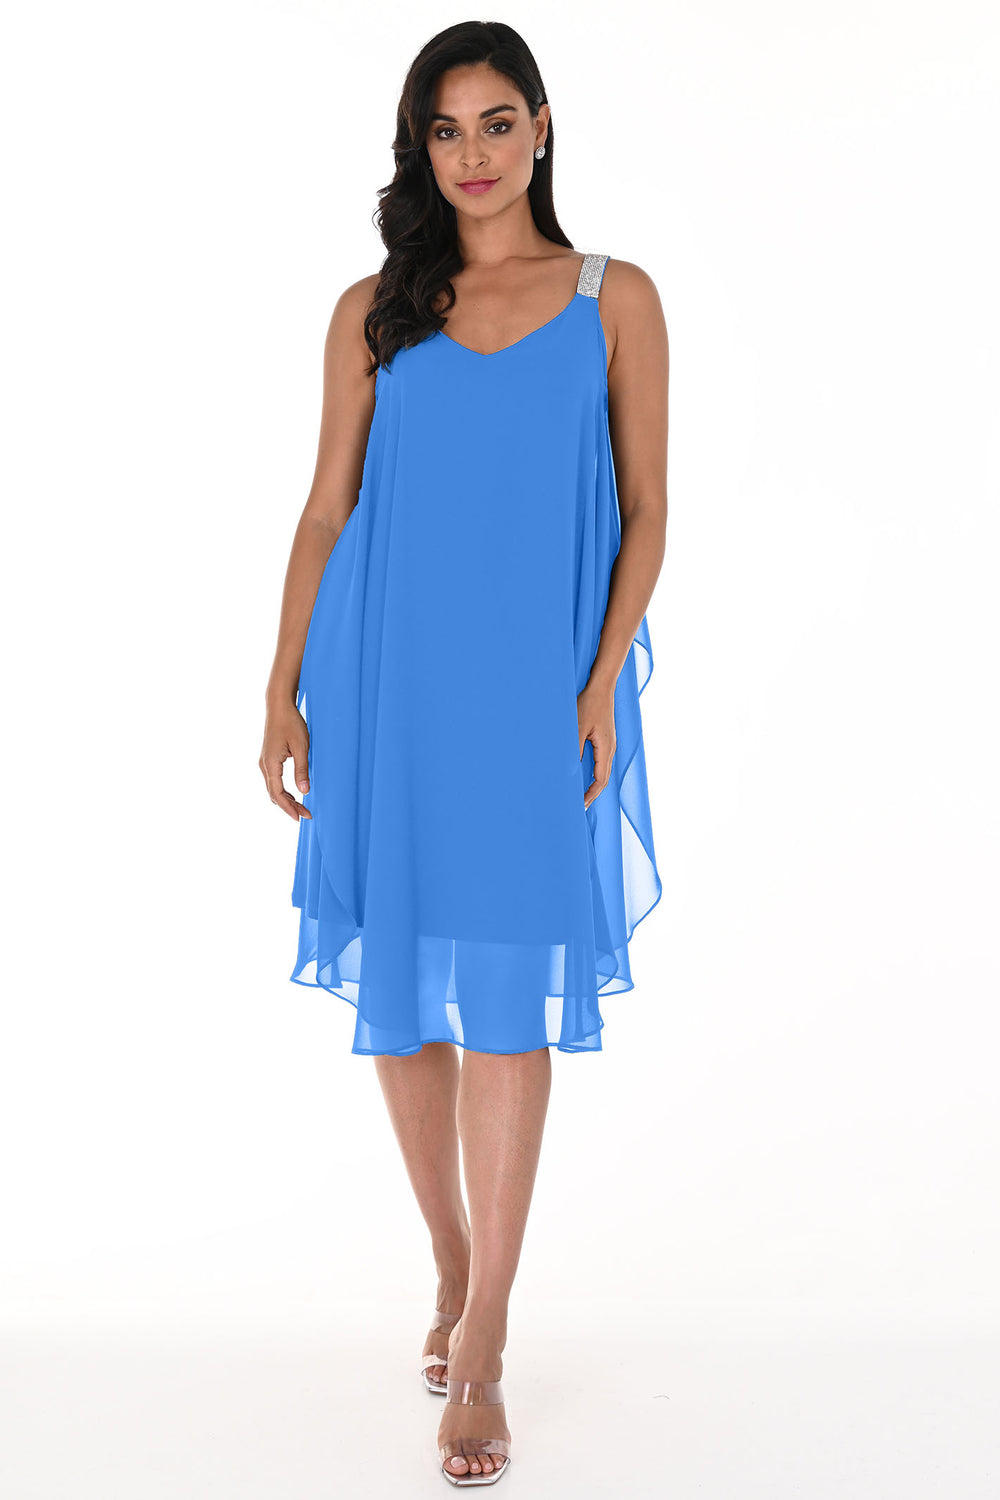 Frank Lyman 248001 Blue Chiffon Overlay Occasion Dress - Dotique